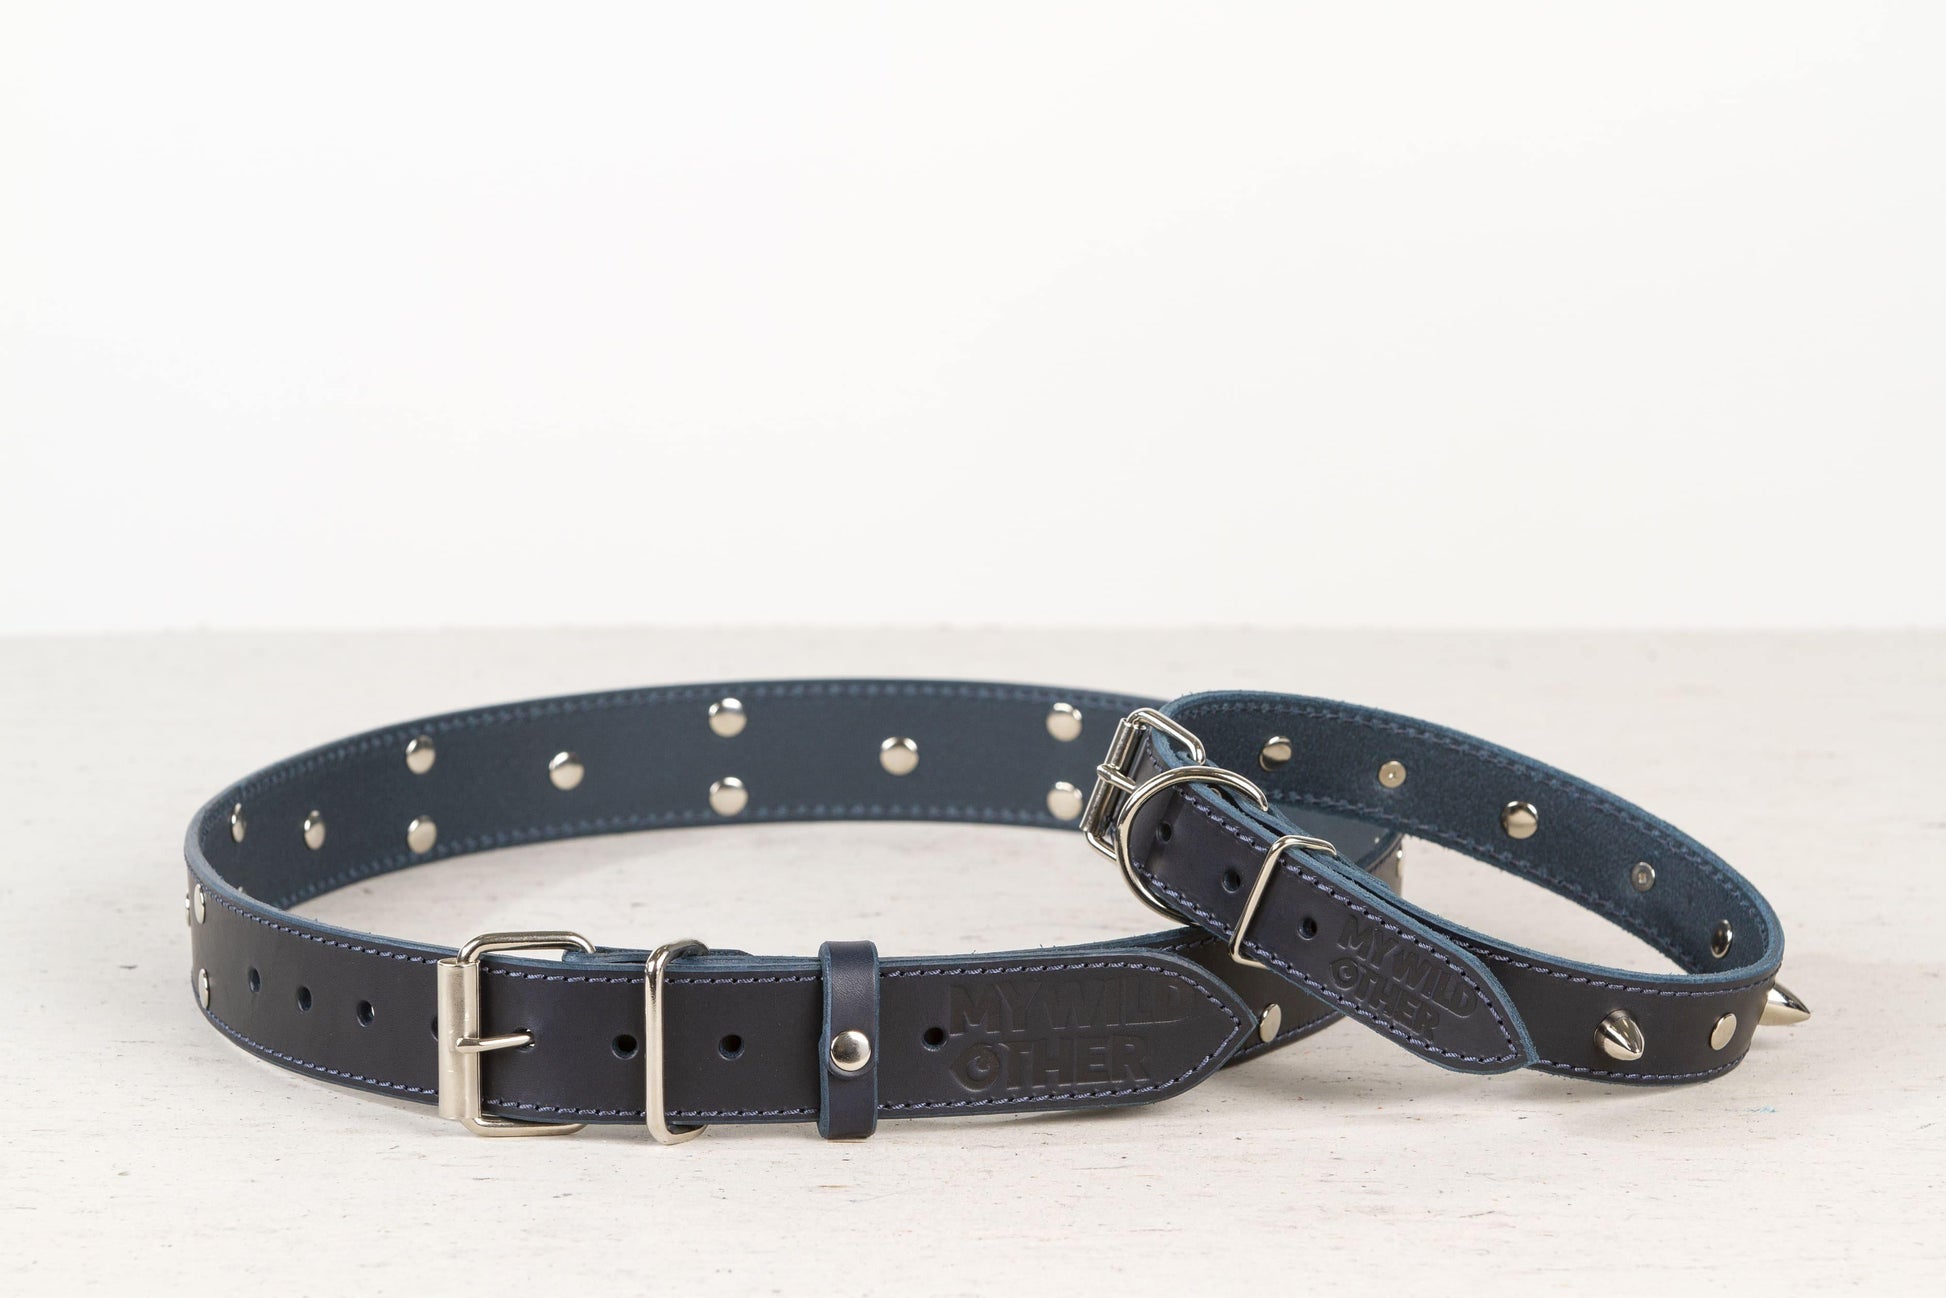 Handmade blue leather STUDDED dog collar - premium dog goods handmade in Europe by animalistus